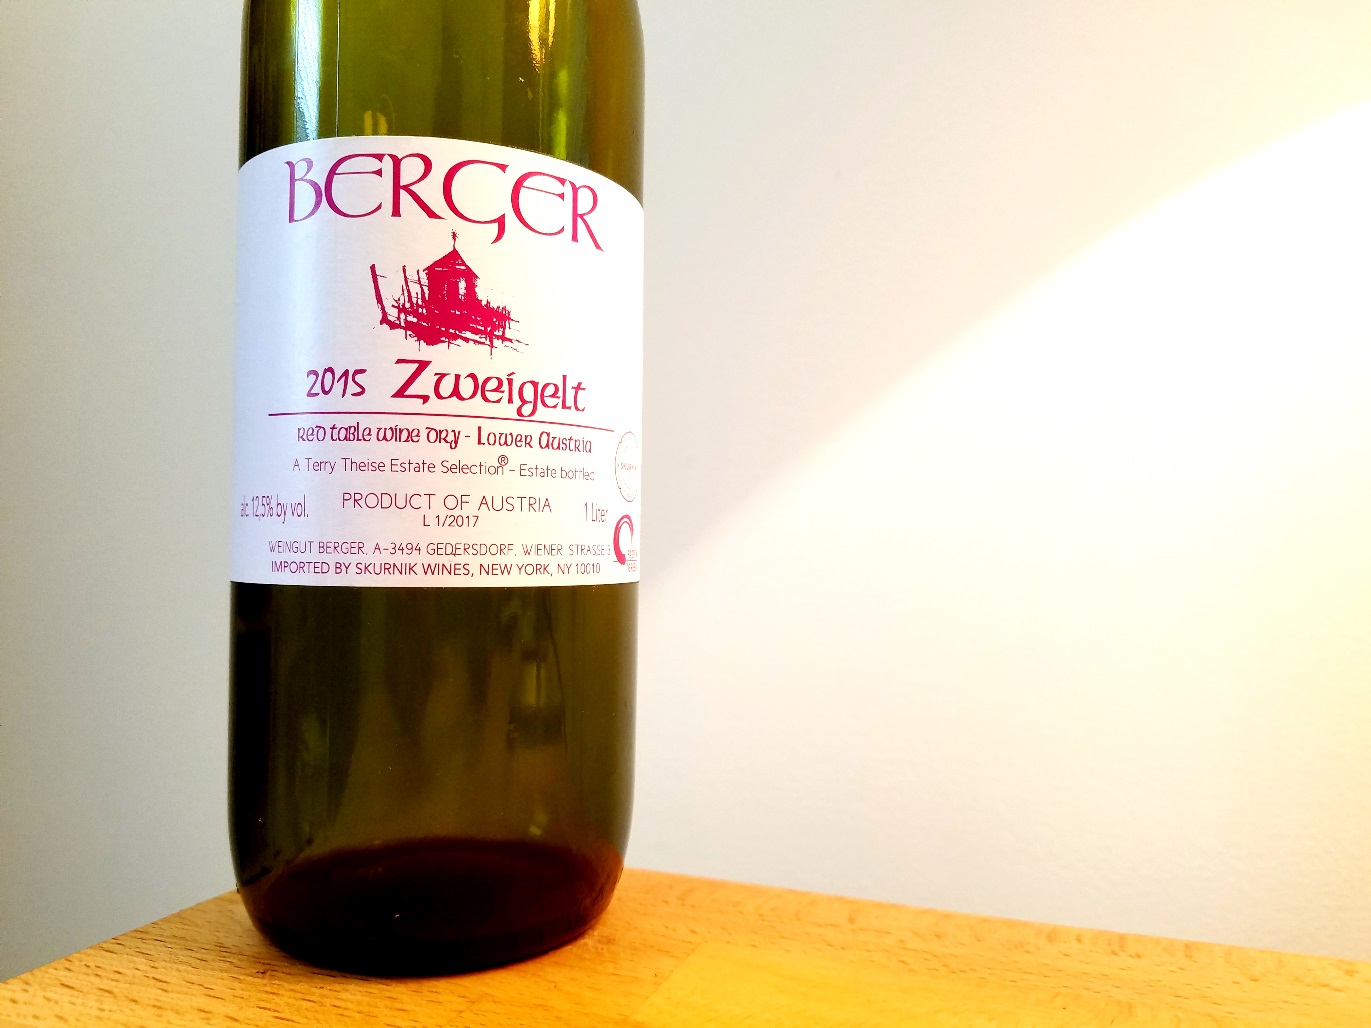 Berger, Zweigelt 2015, Austria. Wine Casual